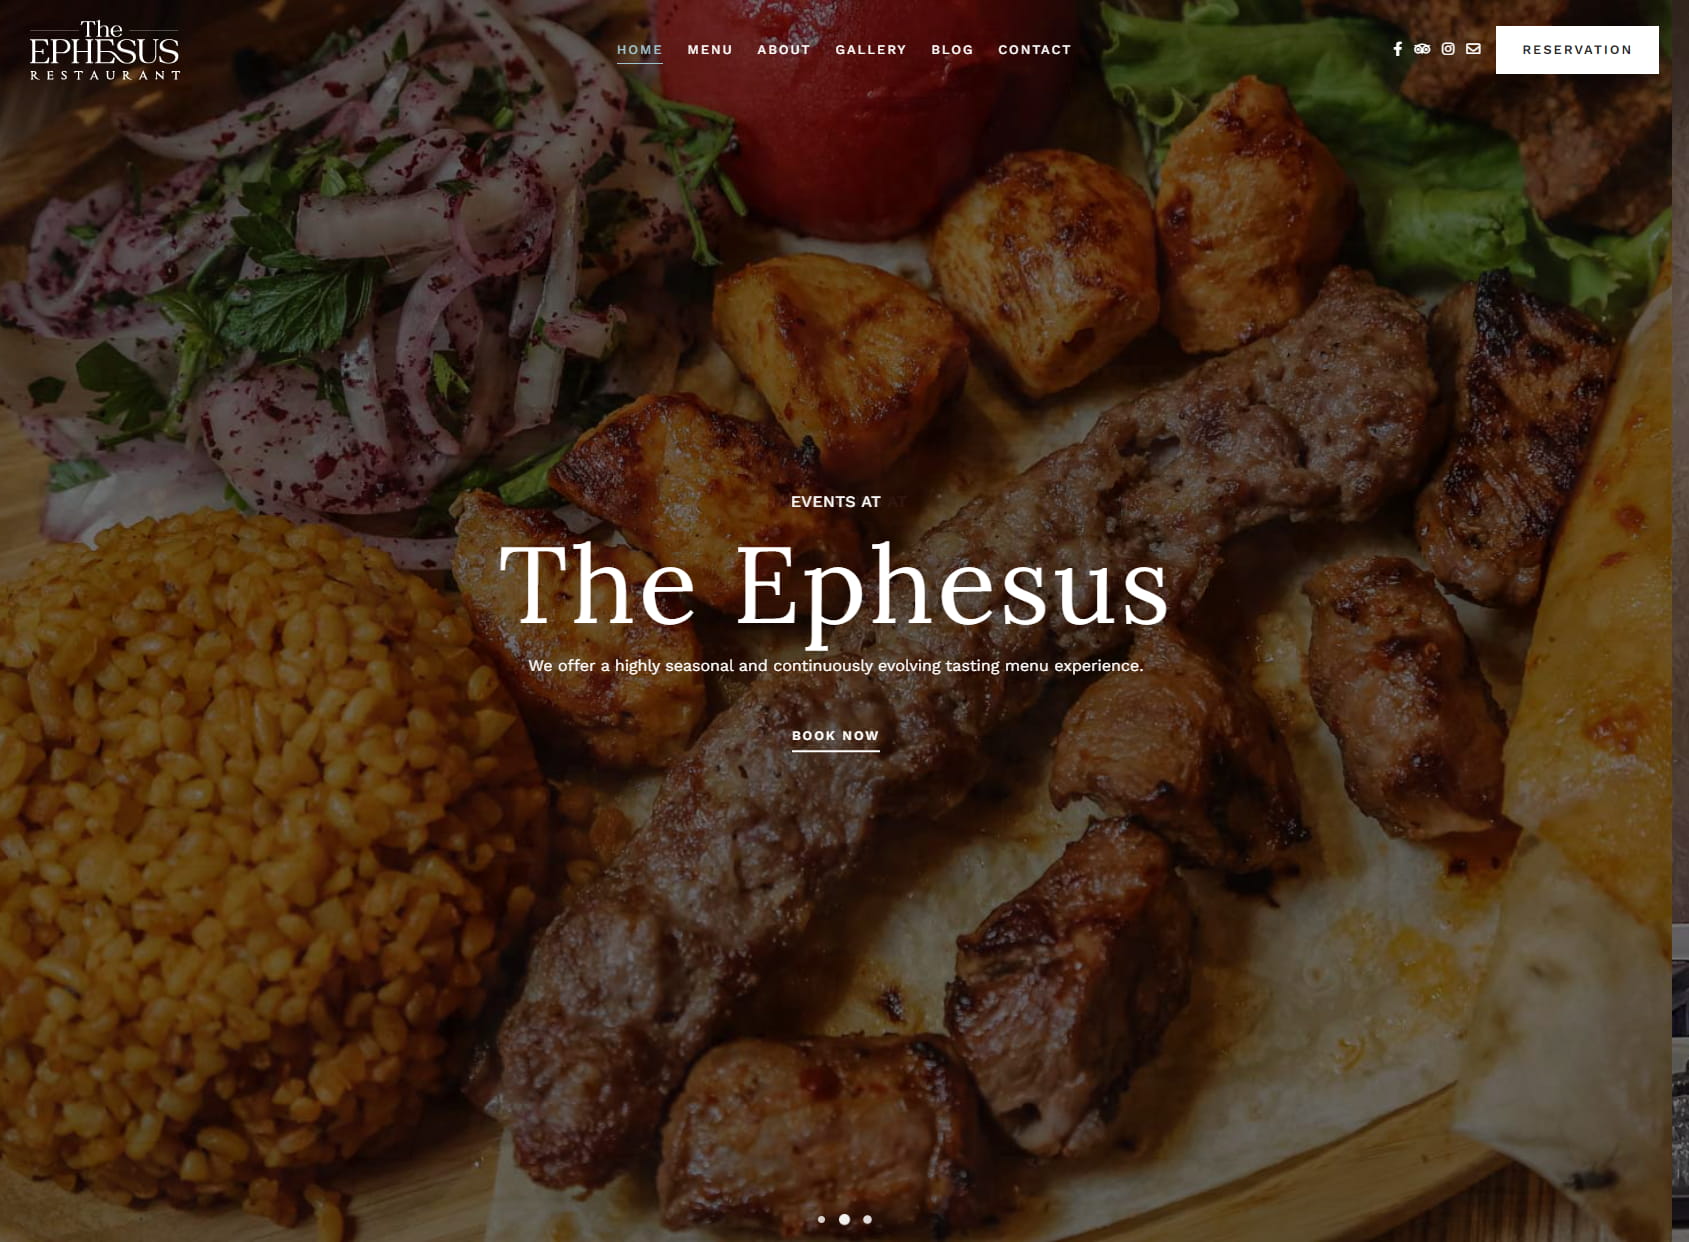 The Ephesus Restaurant